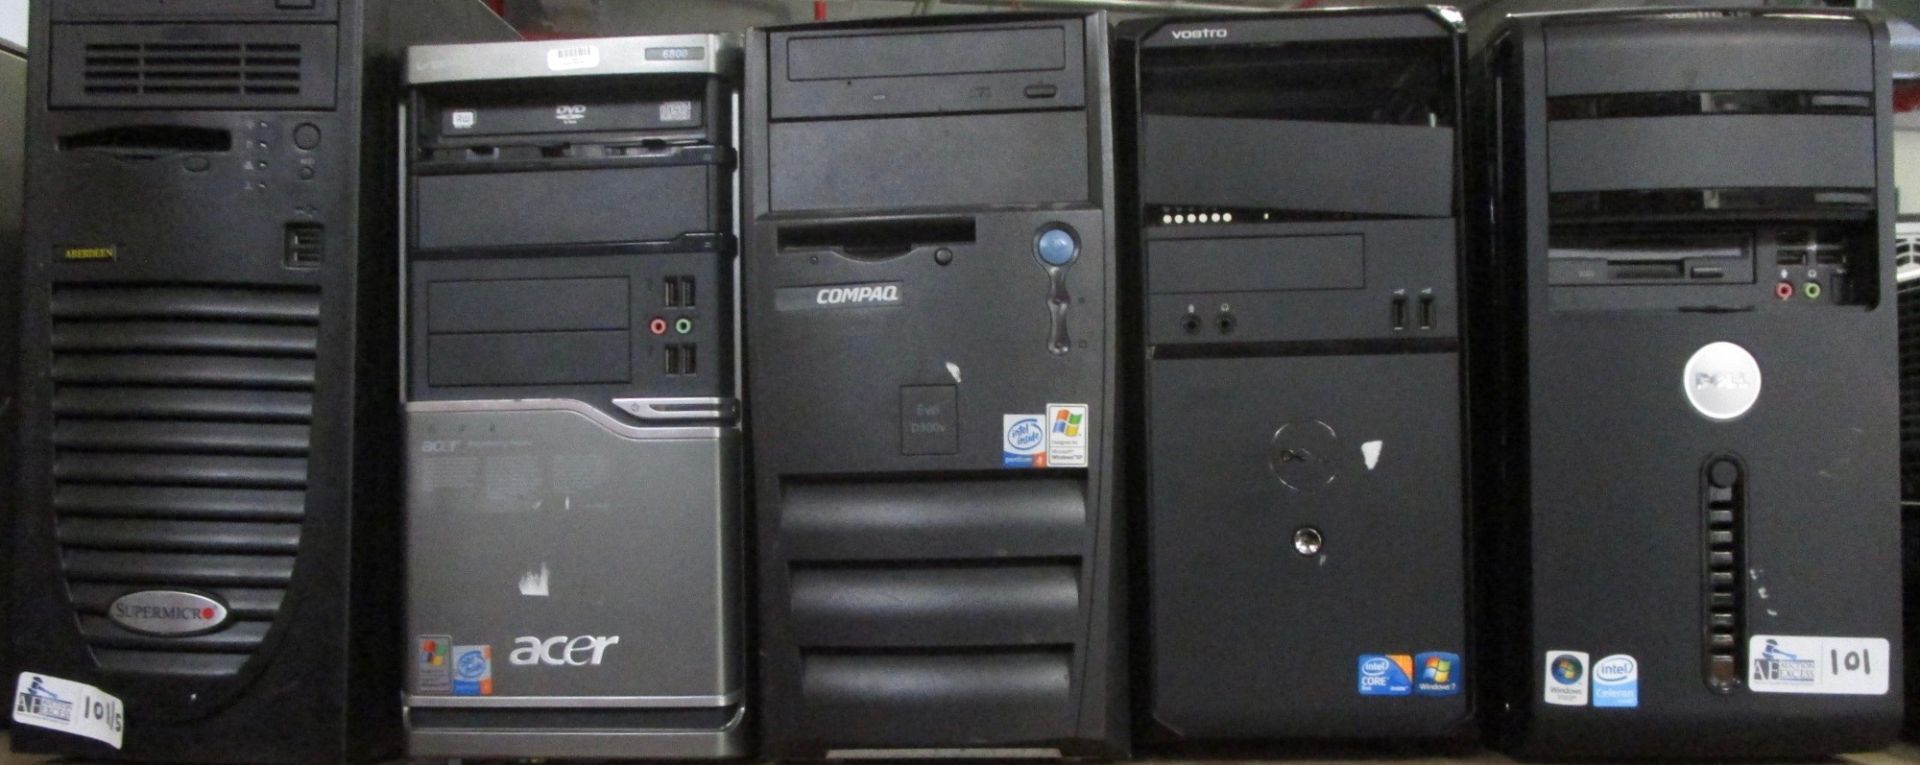 LOT 0F 5 COMPUTERS